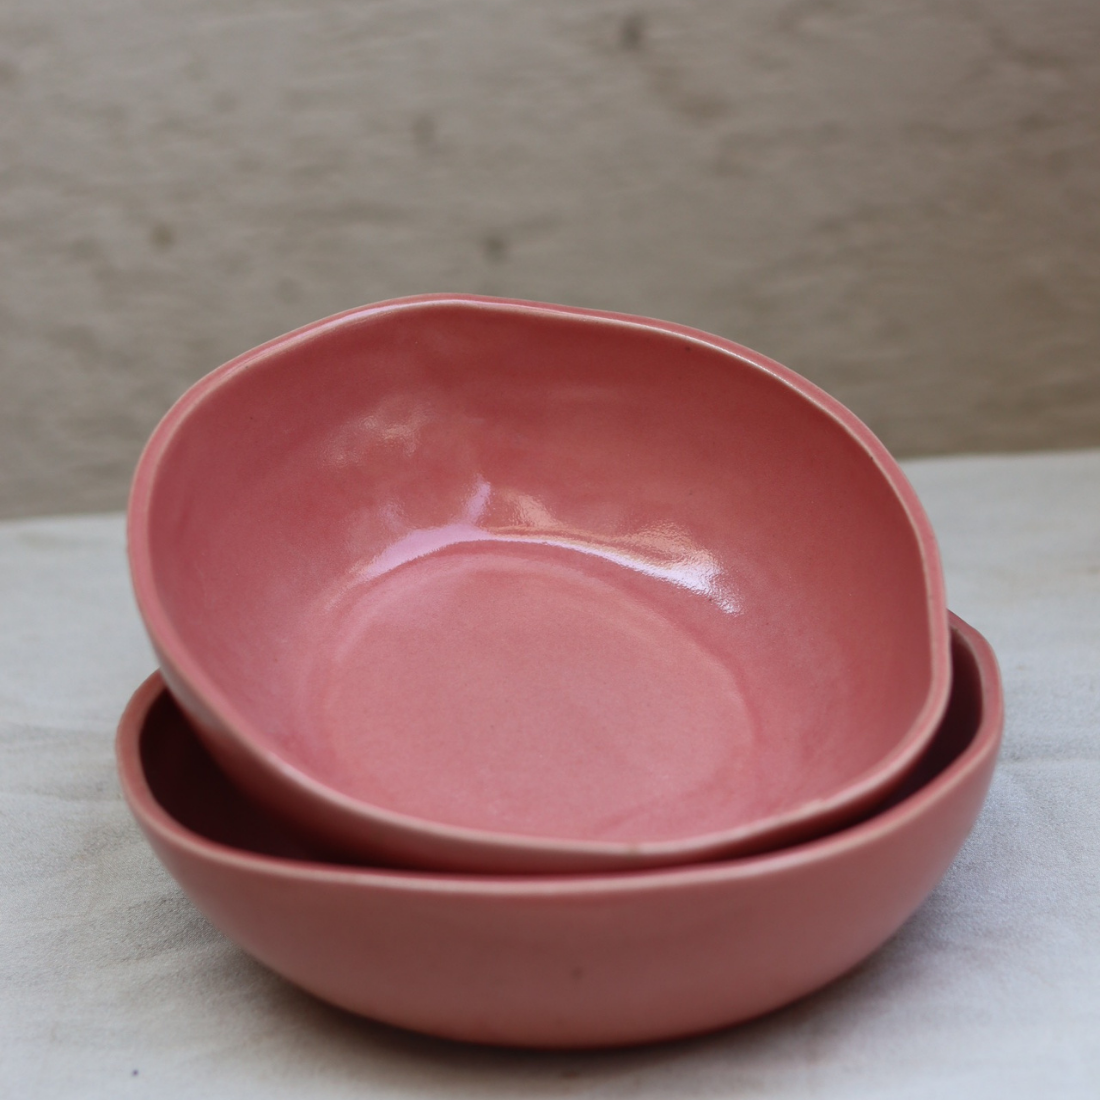 Handmade ceramic pink curry bowls